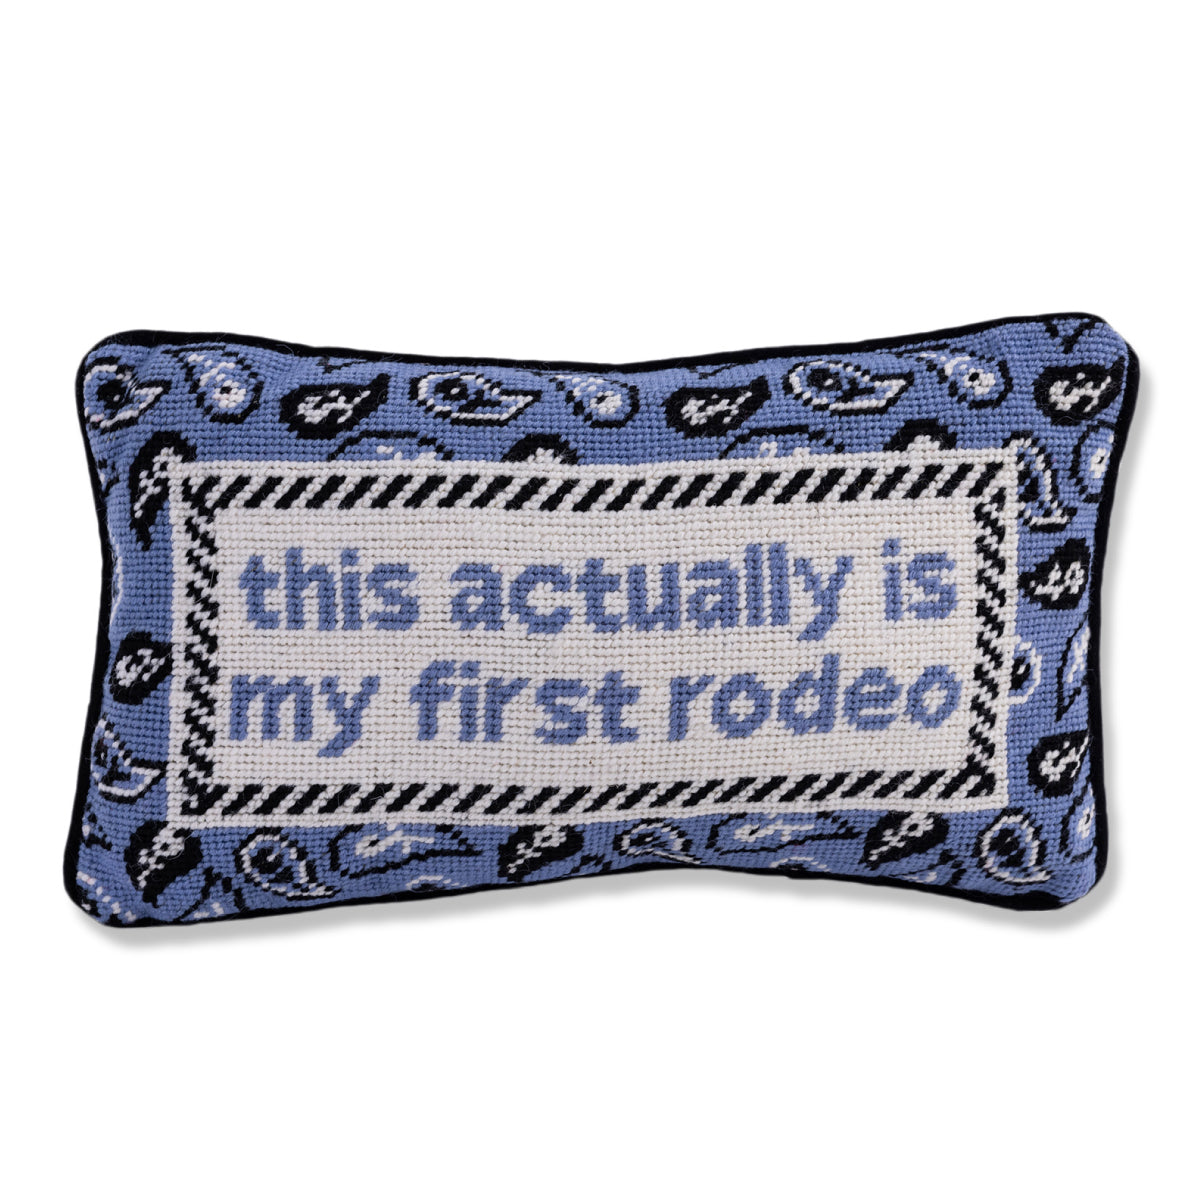 First Rodeo Needlepoint Pillow